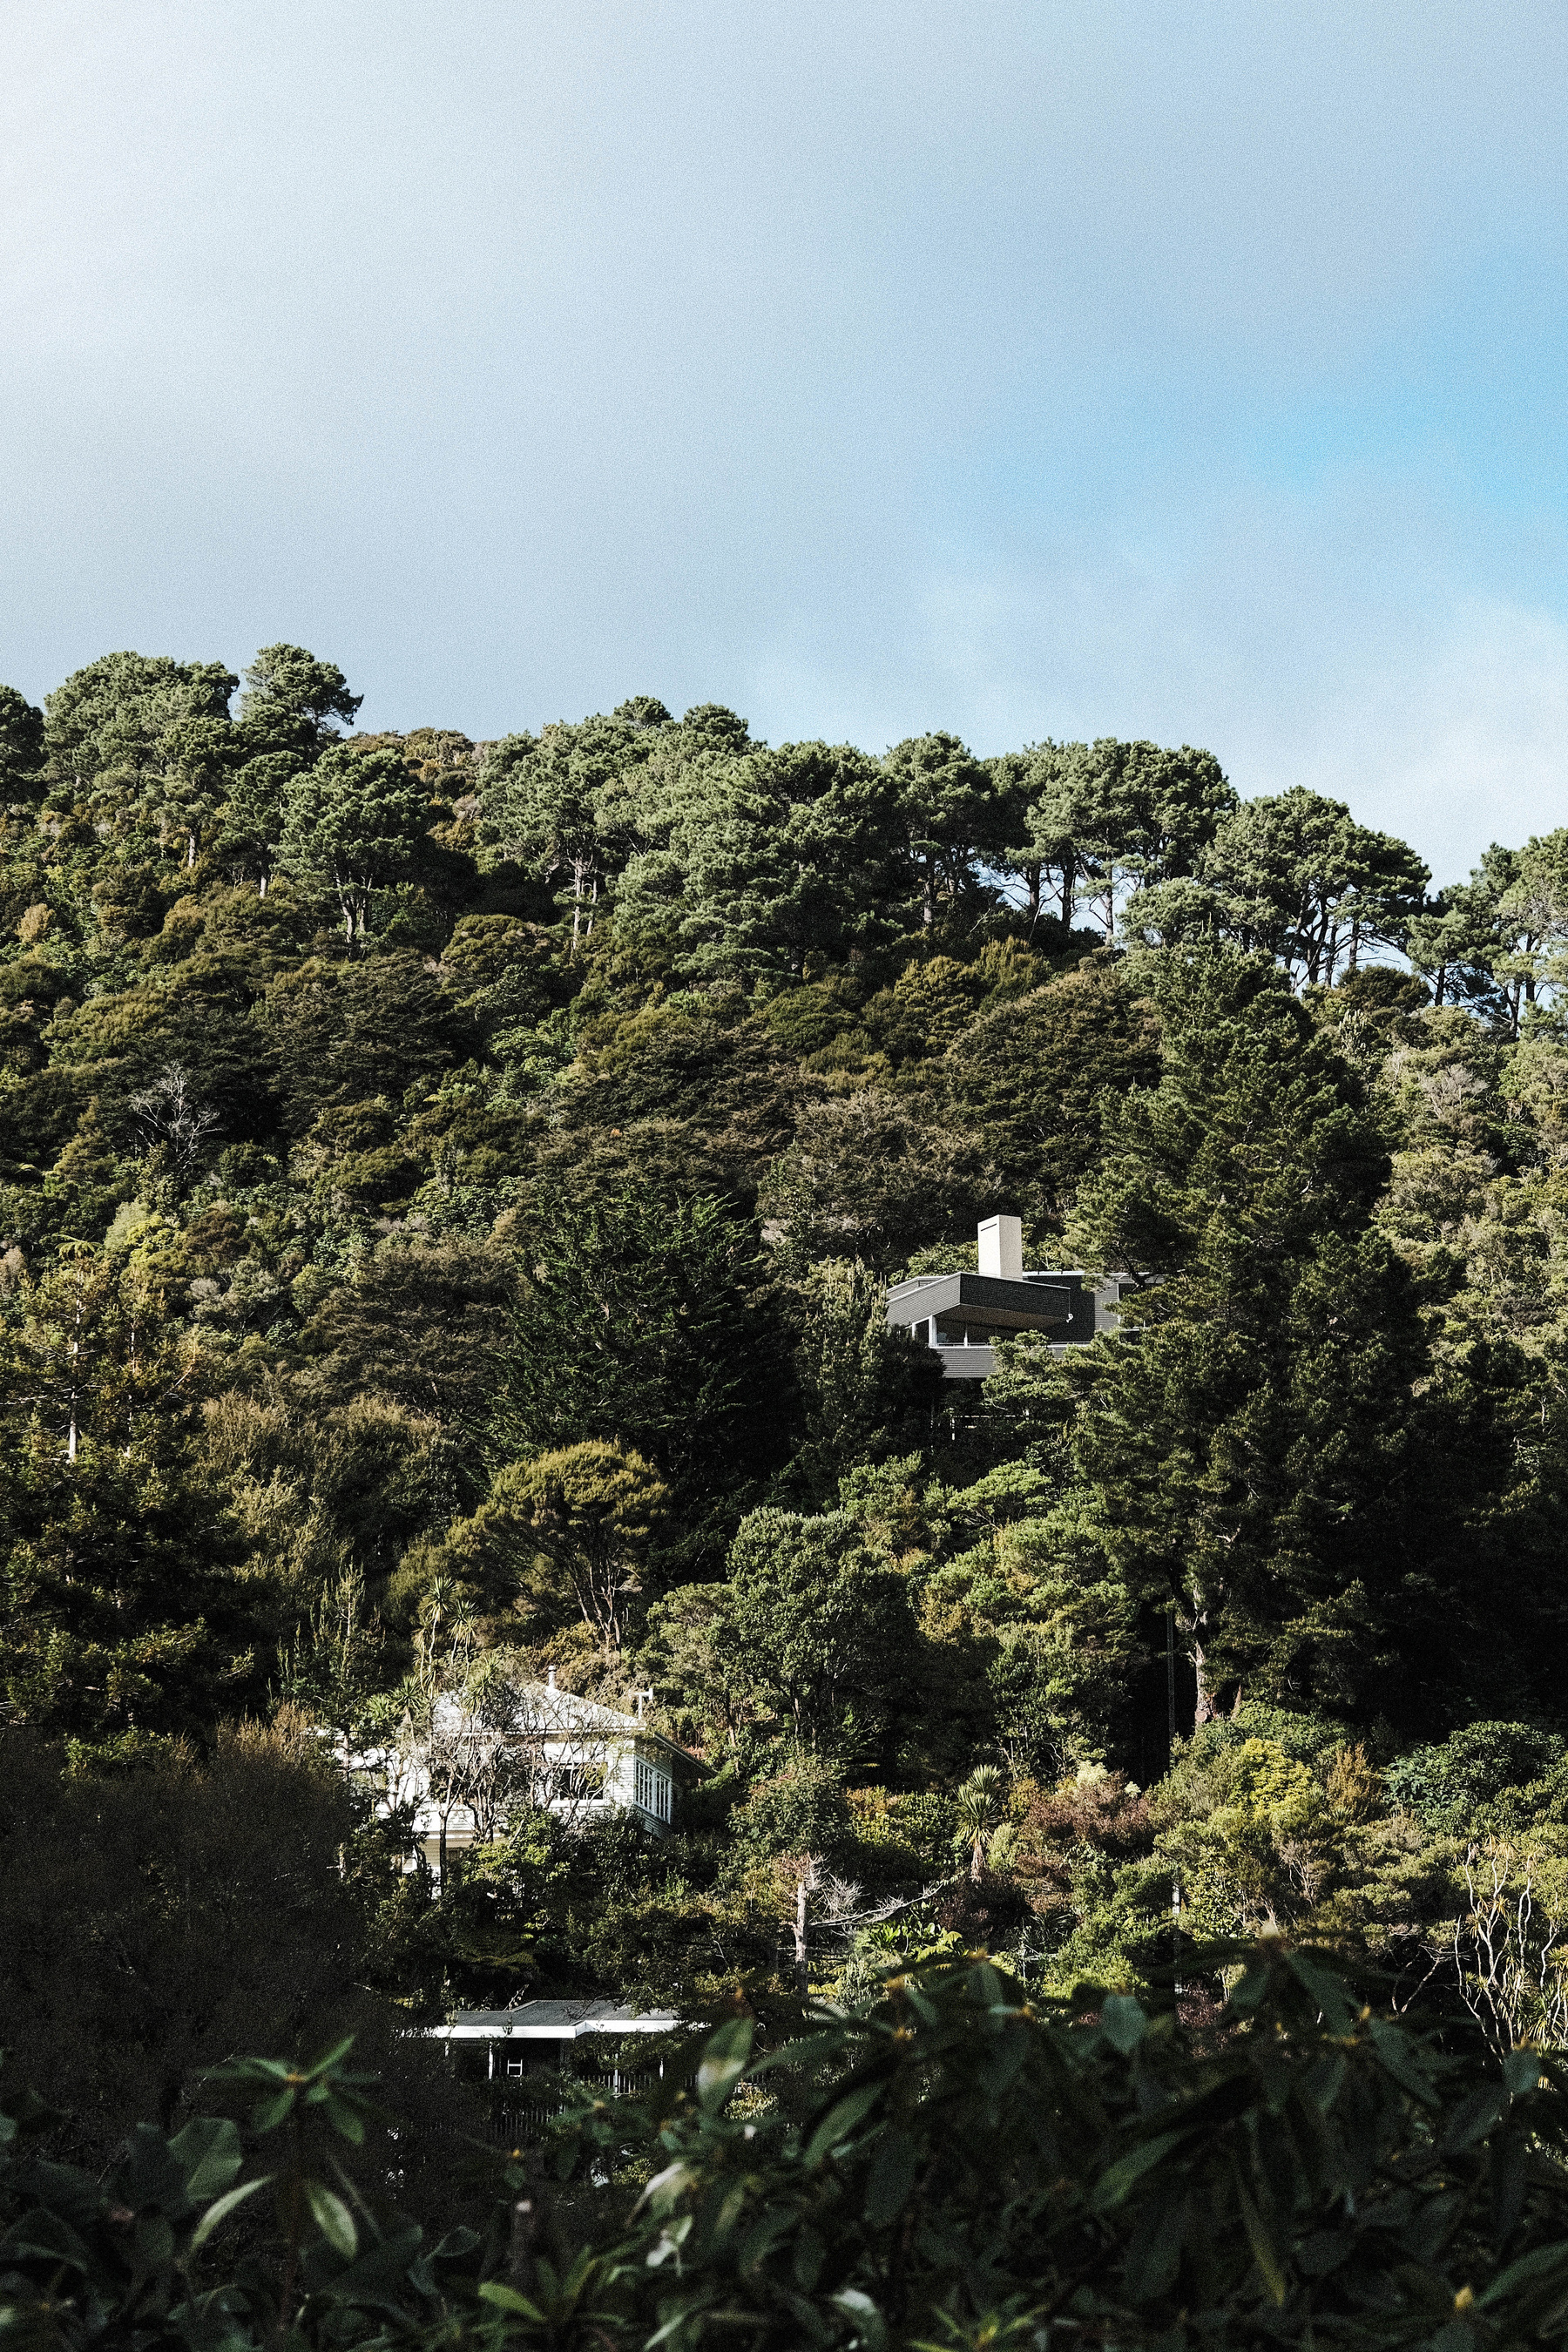 Houses nestled in the trees of a hillside